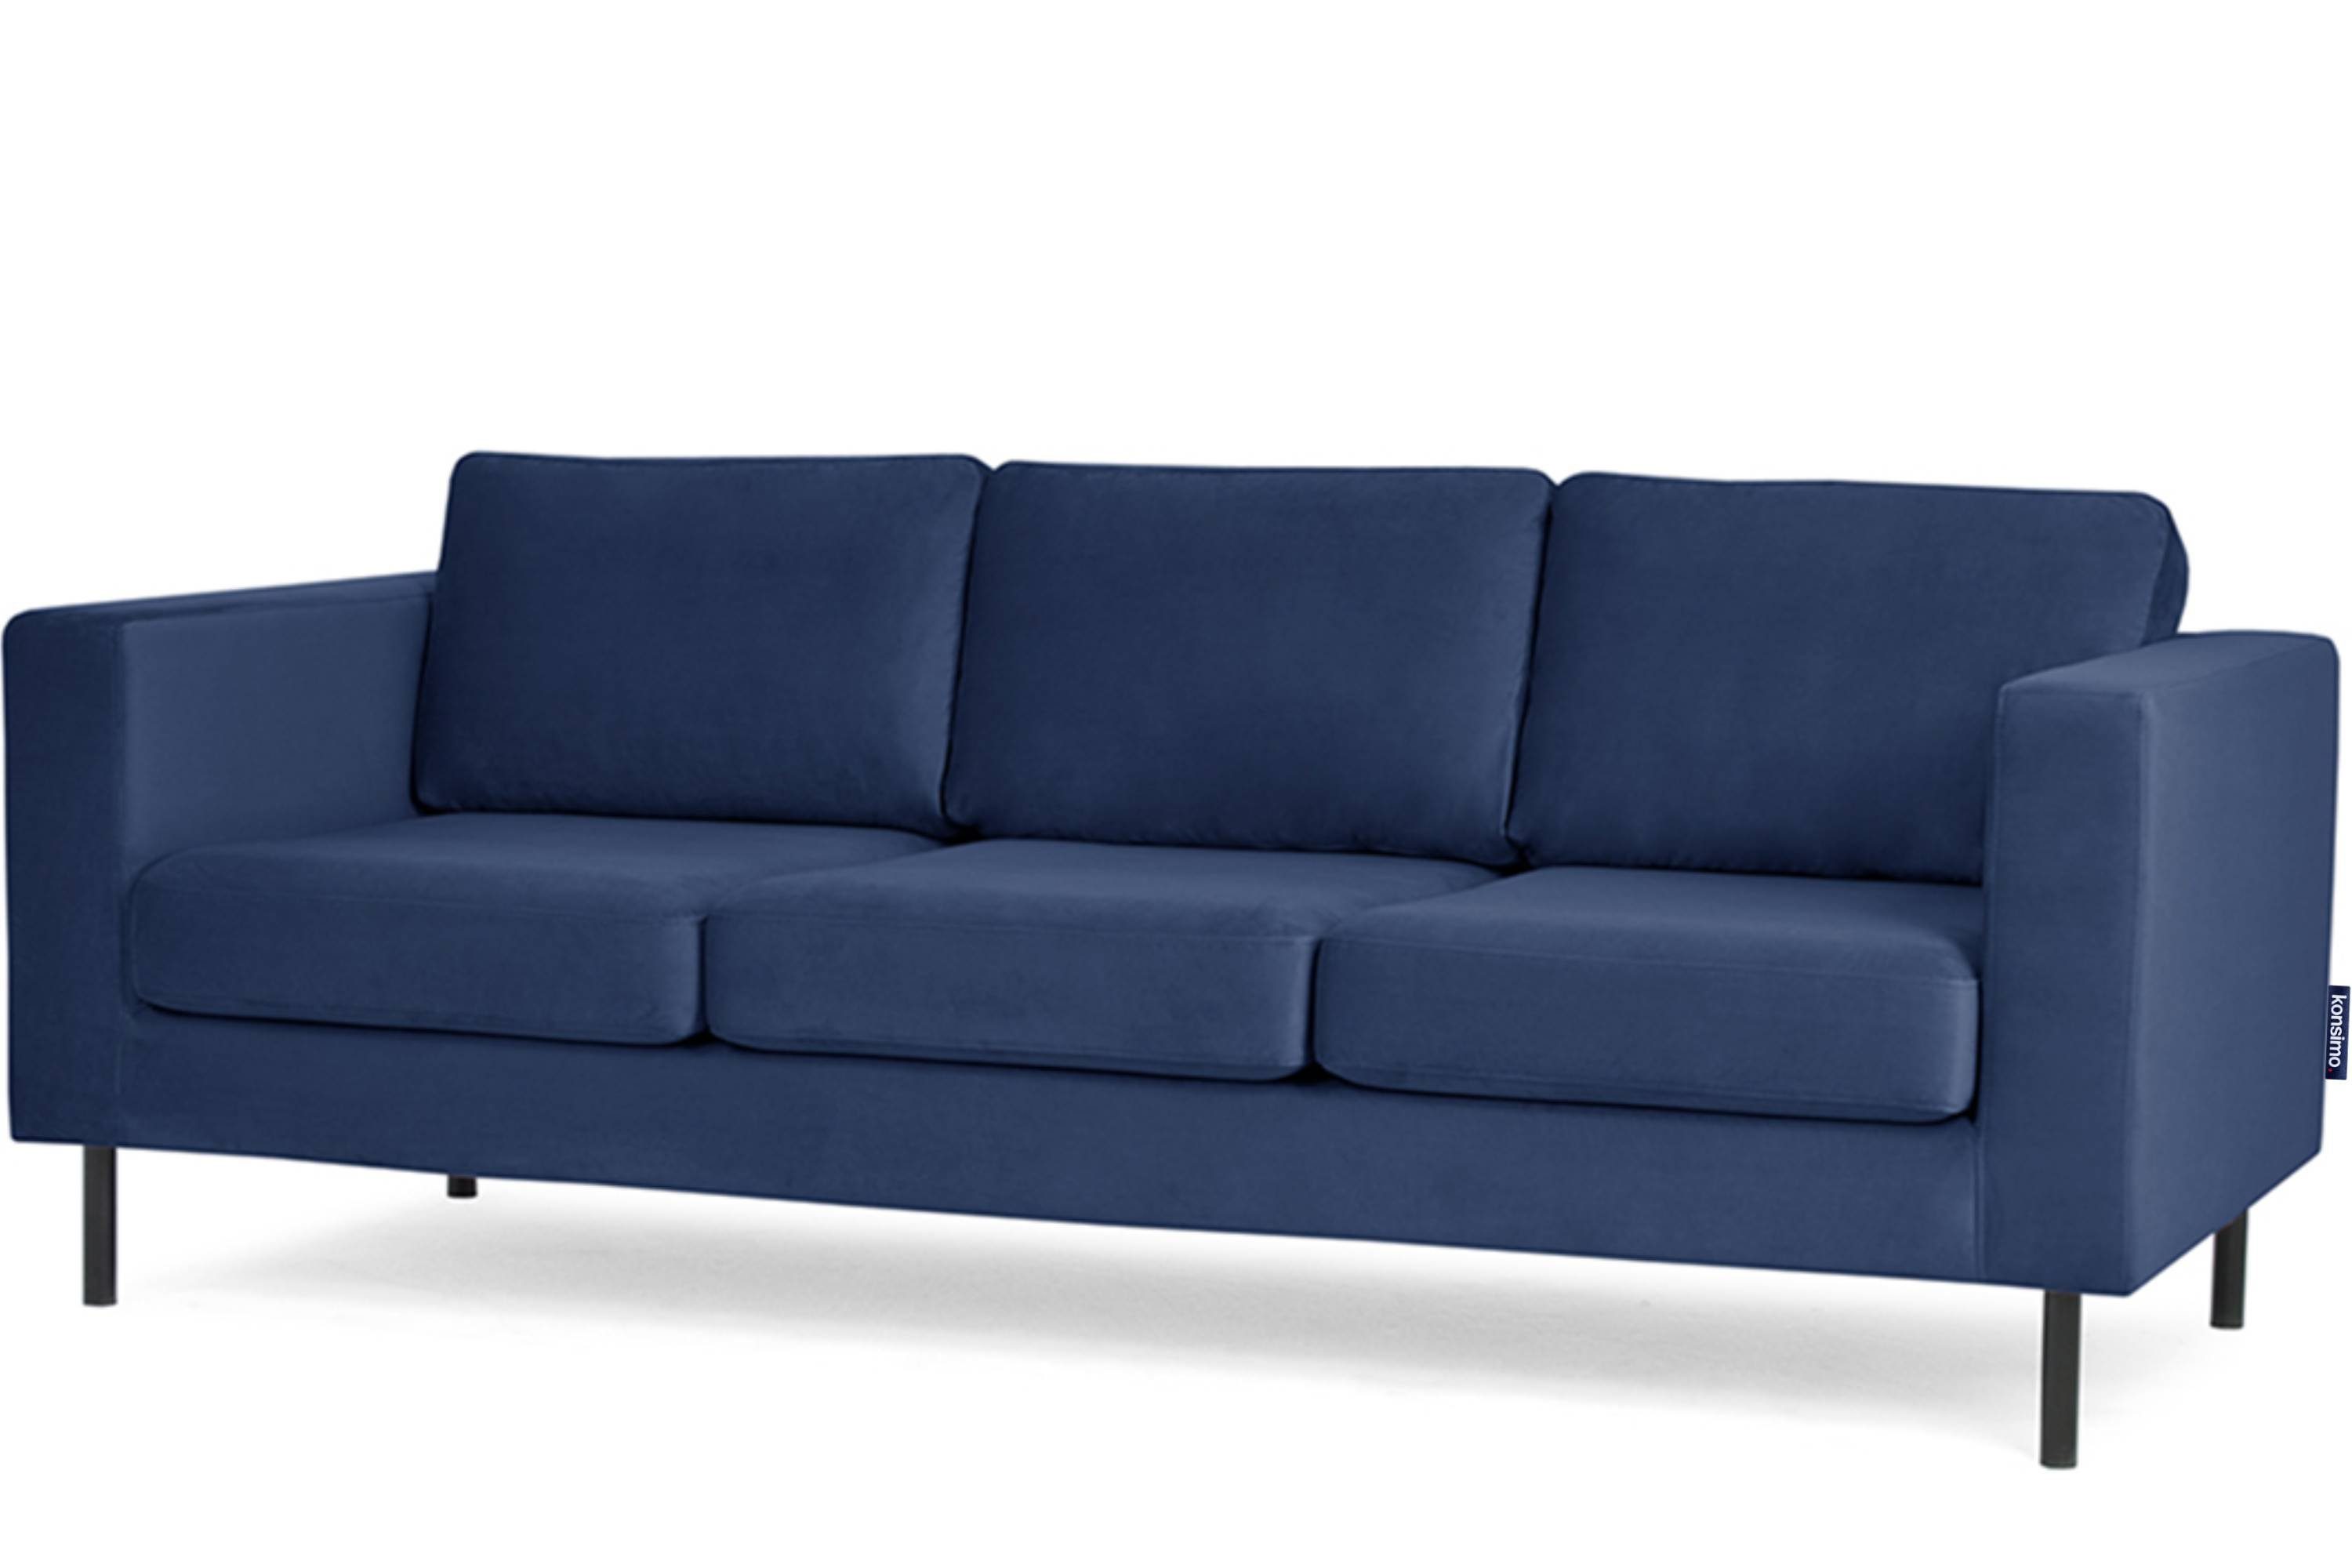 | 3 TOZZI hohe Konsimo | universelles Personen, Sofa marineblau 3-Sitzer Beine, Design marineblau marineblau